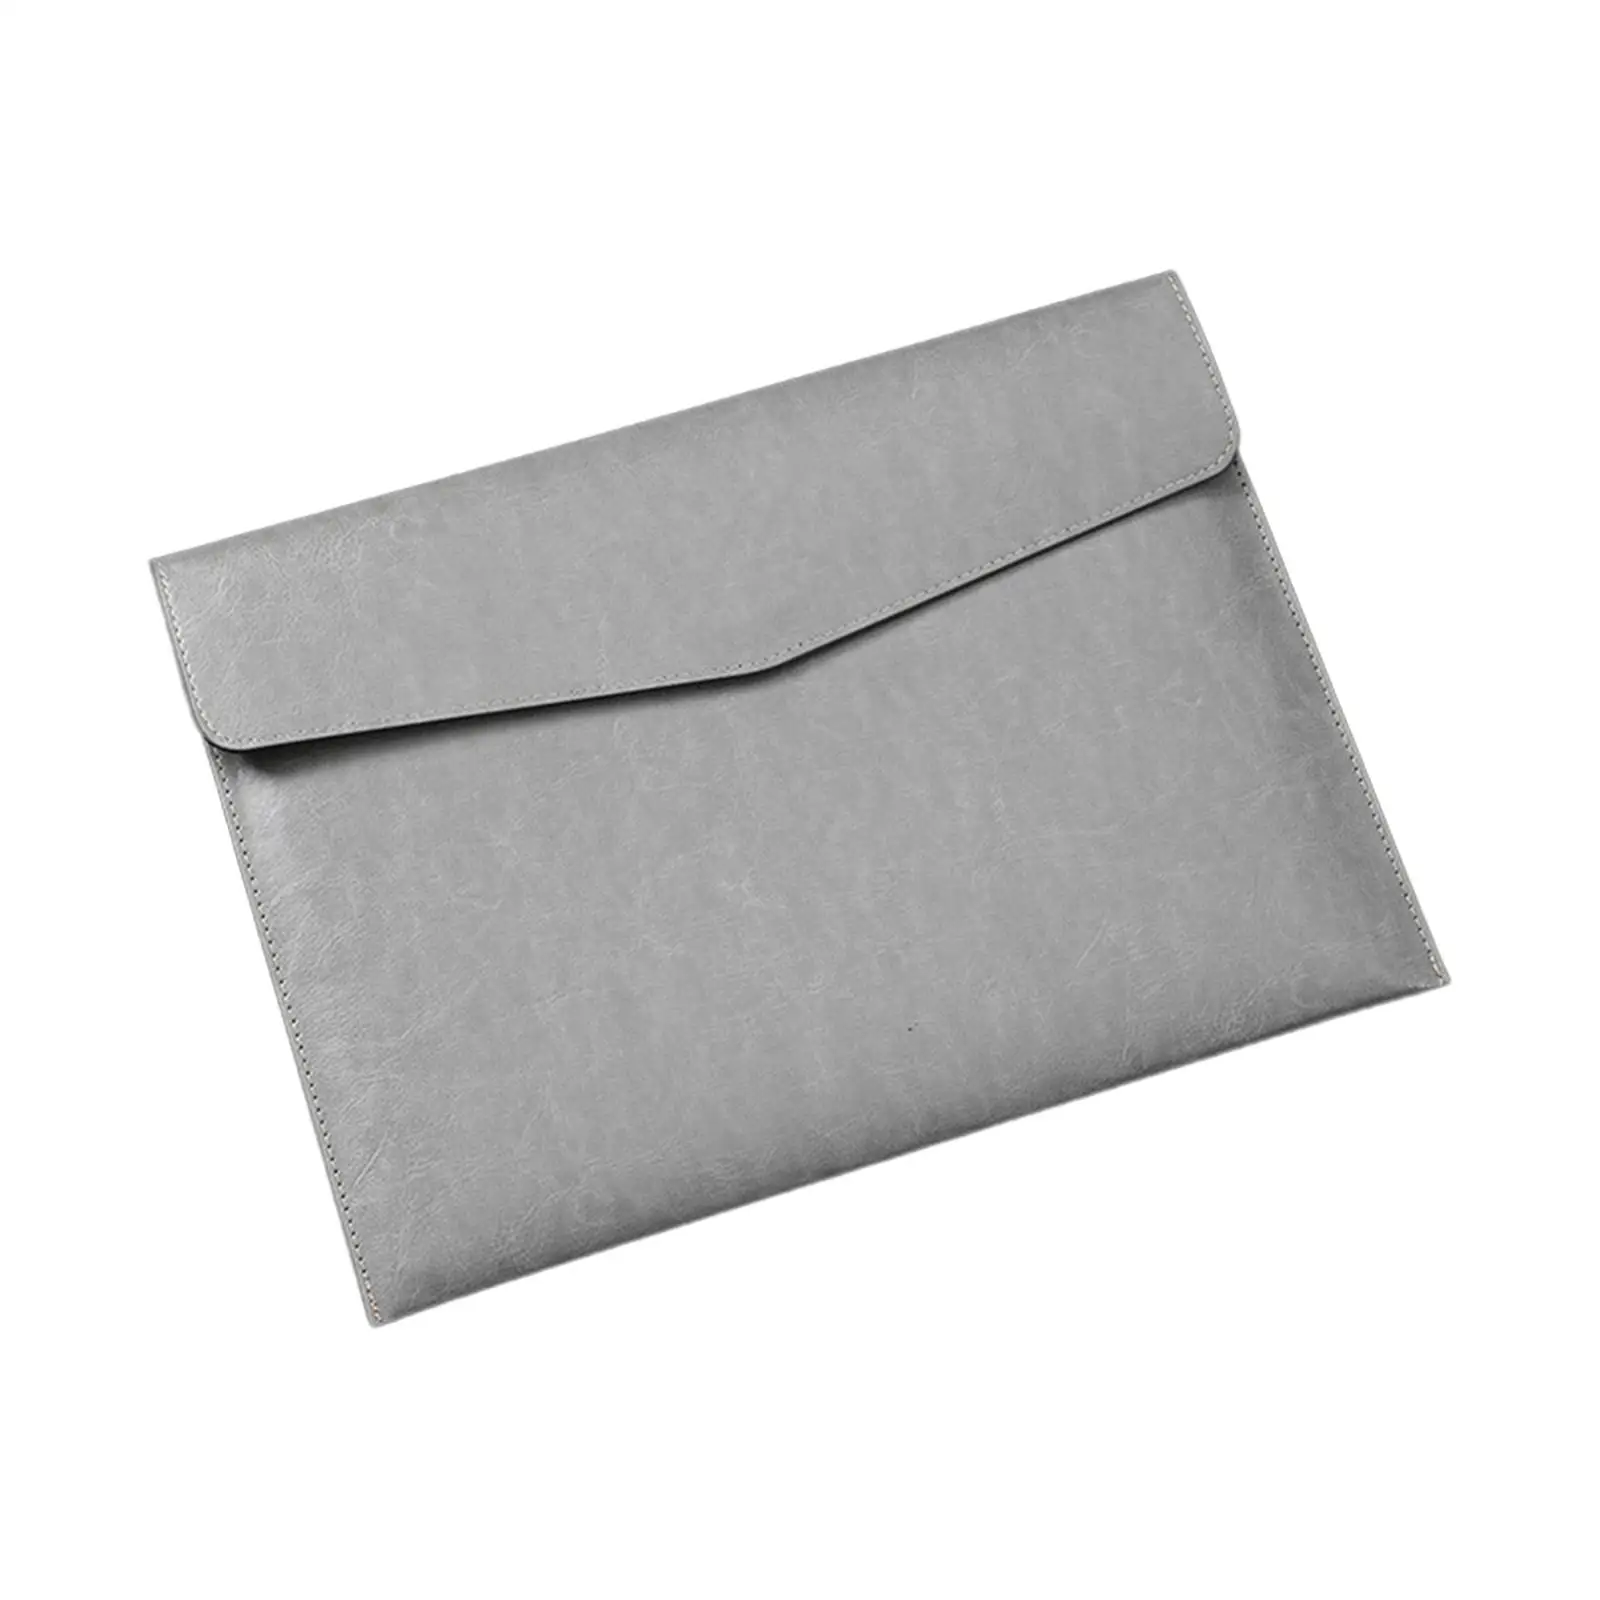 File Folder Document File Folder Portable Envelope Folder Case Expanding File Organizer for Company Office Home Travel Business